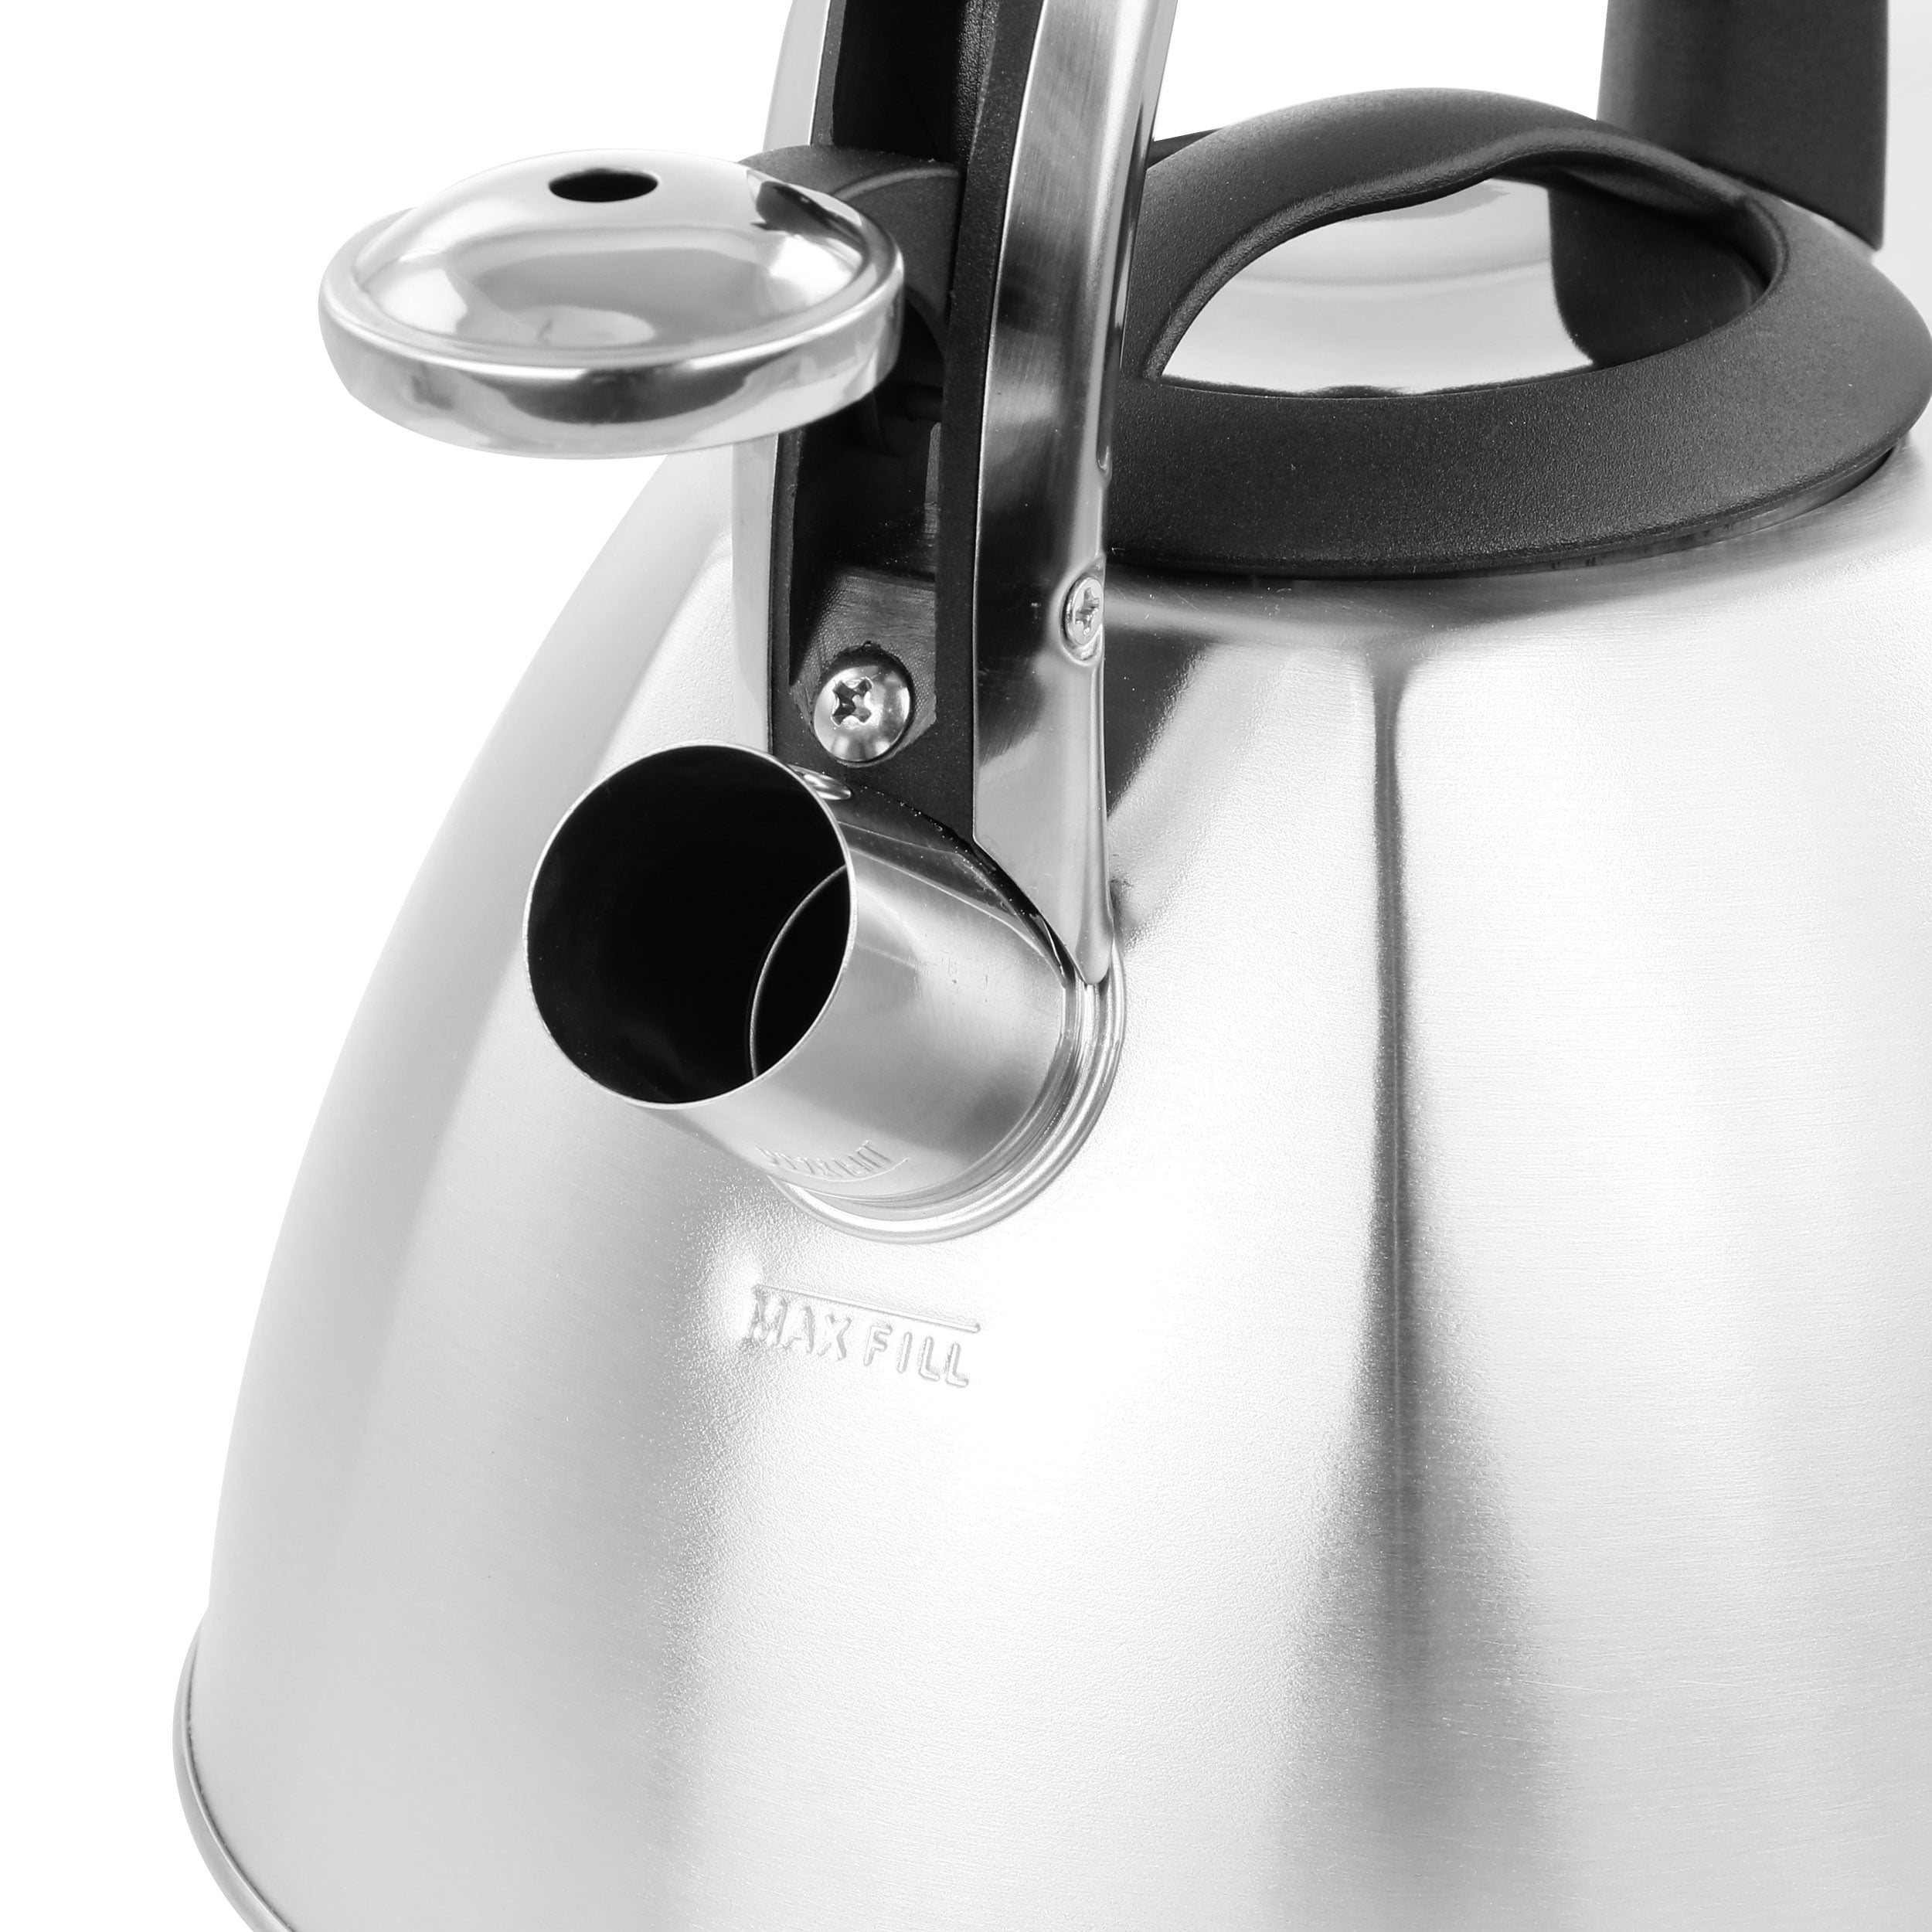 Stovetop Whistling Tea Kettle 3 Liter (3-Quart) Classic Teapot Induction  Compatible-Gold 2407